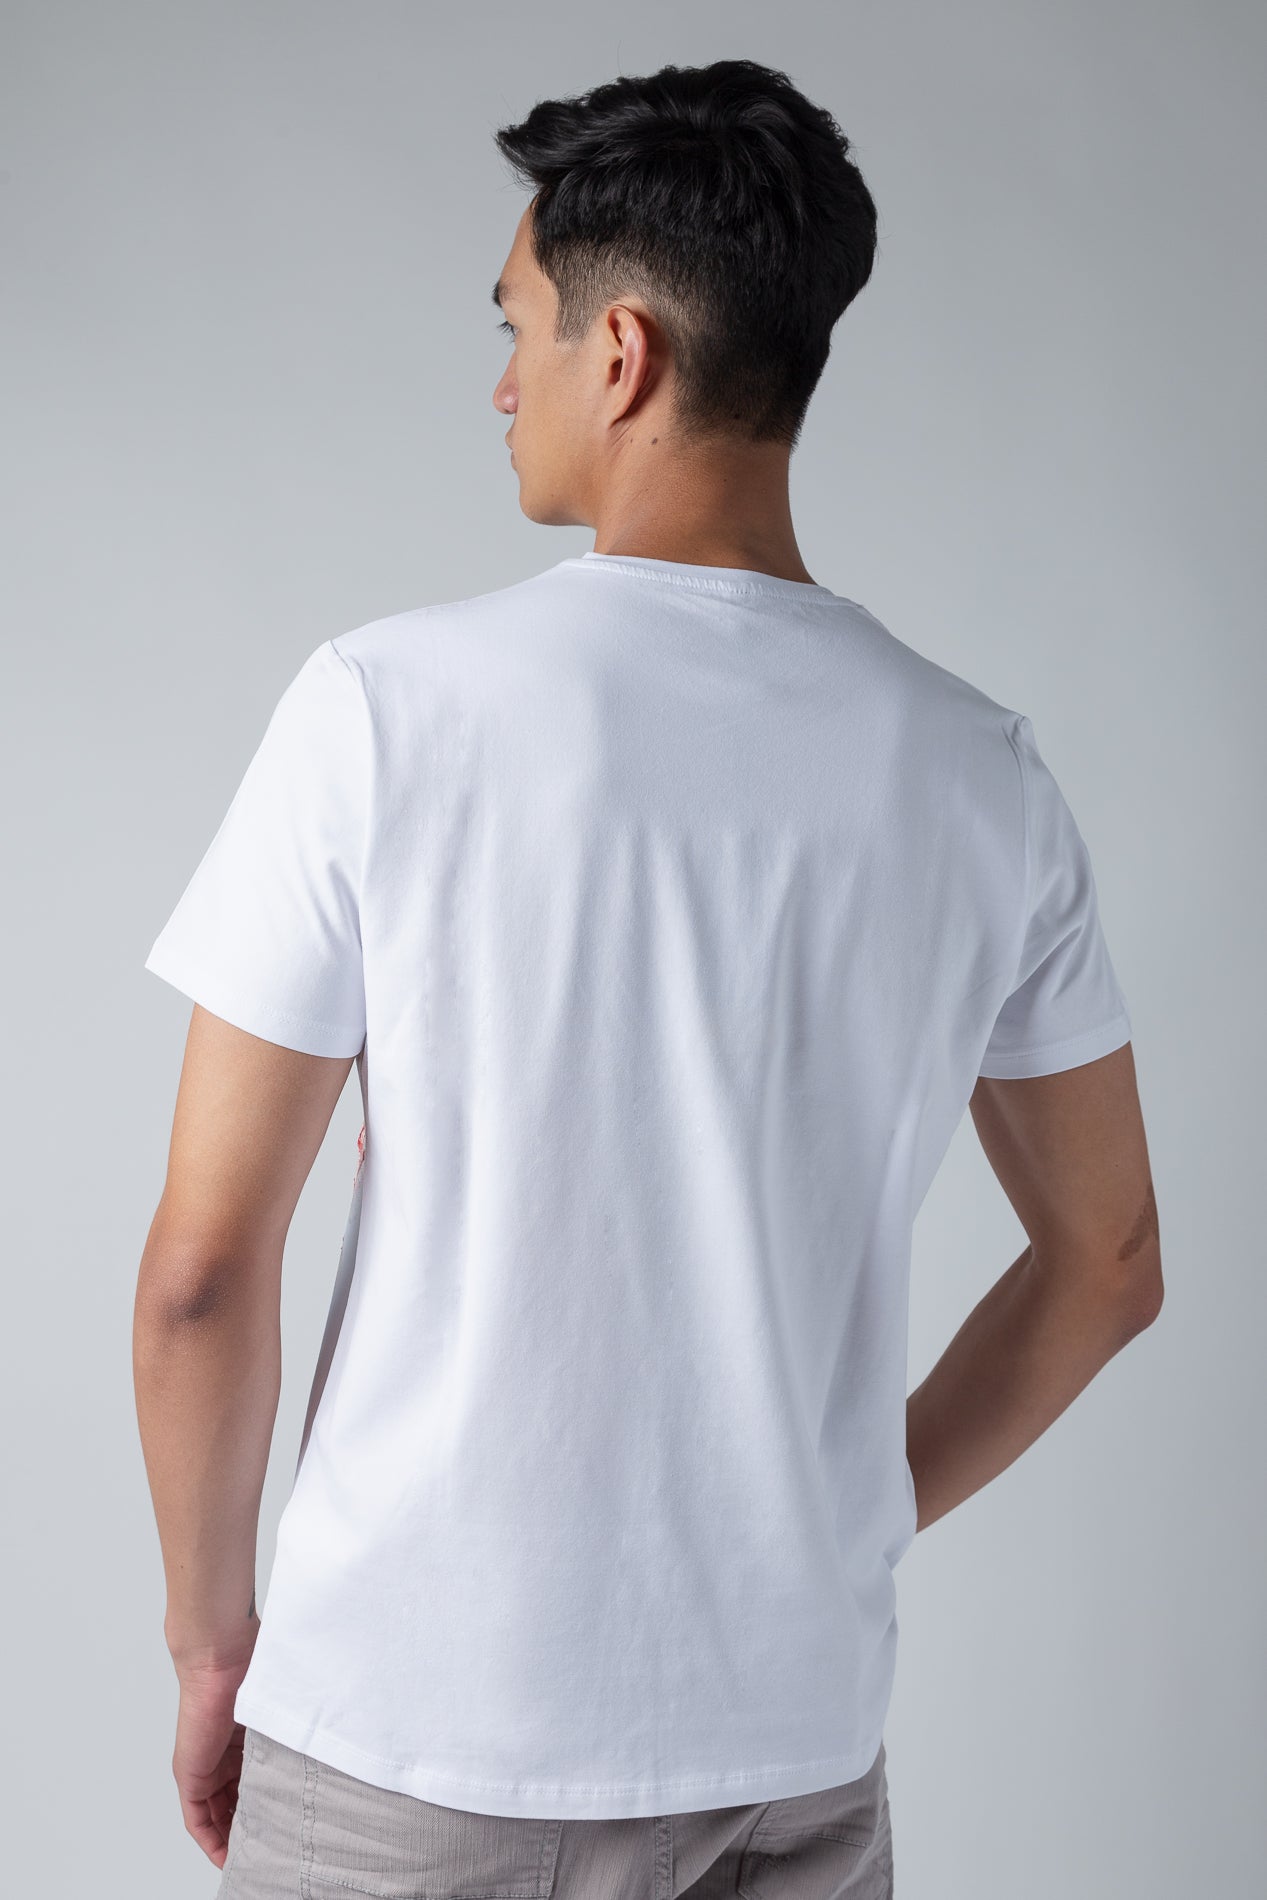 White  T-shirt back